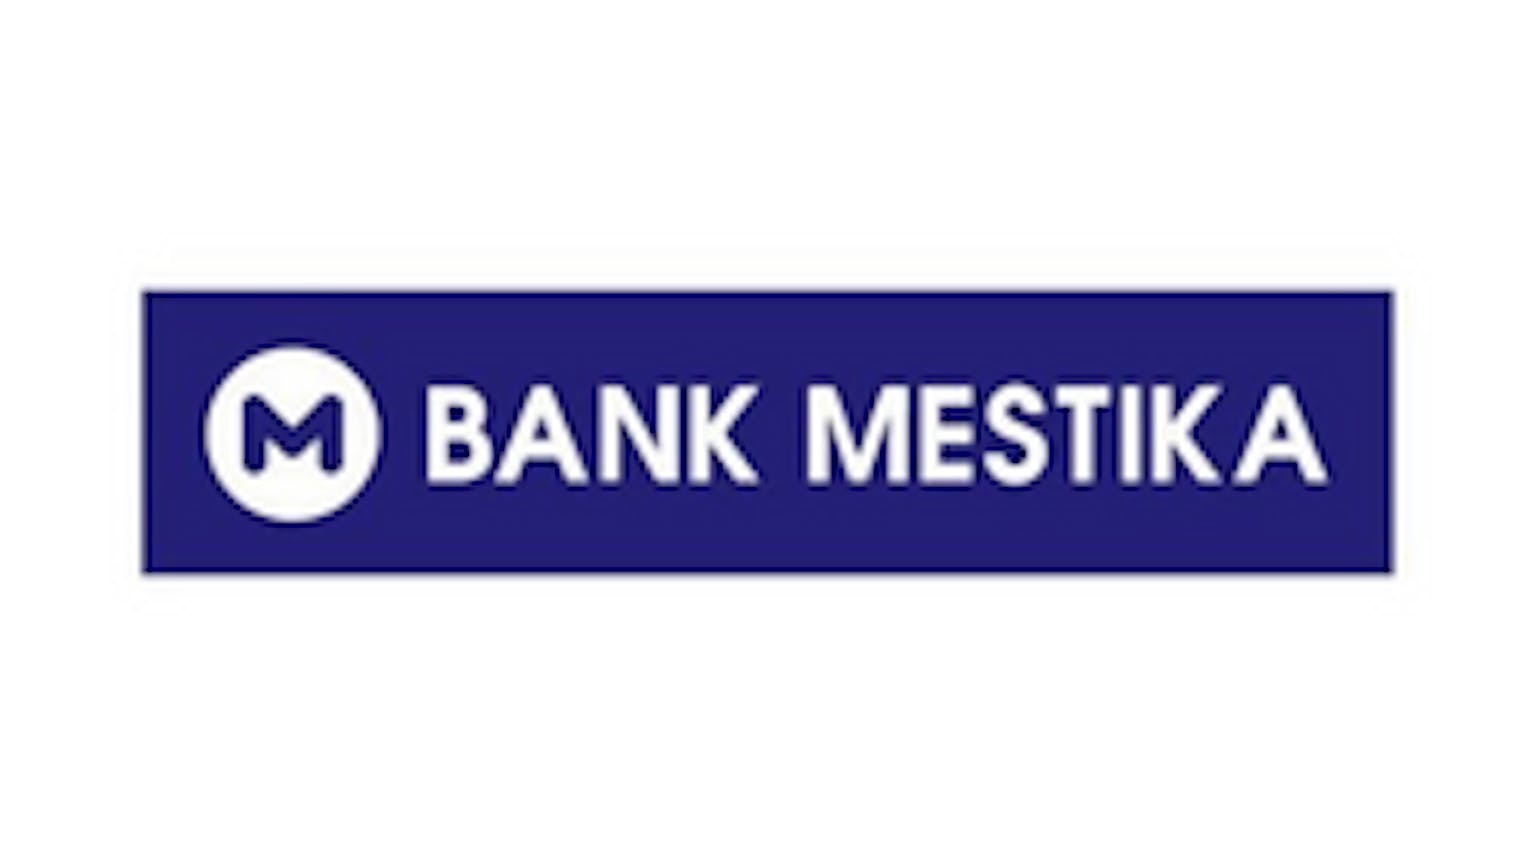 Bank Mestika KMG Tetap